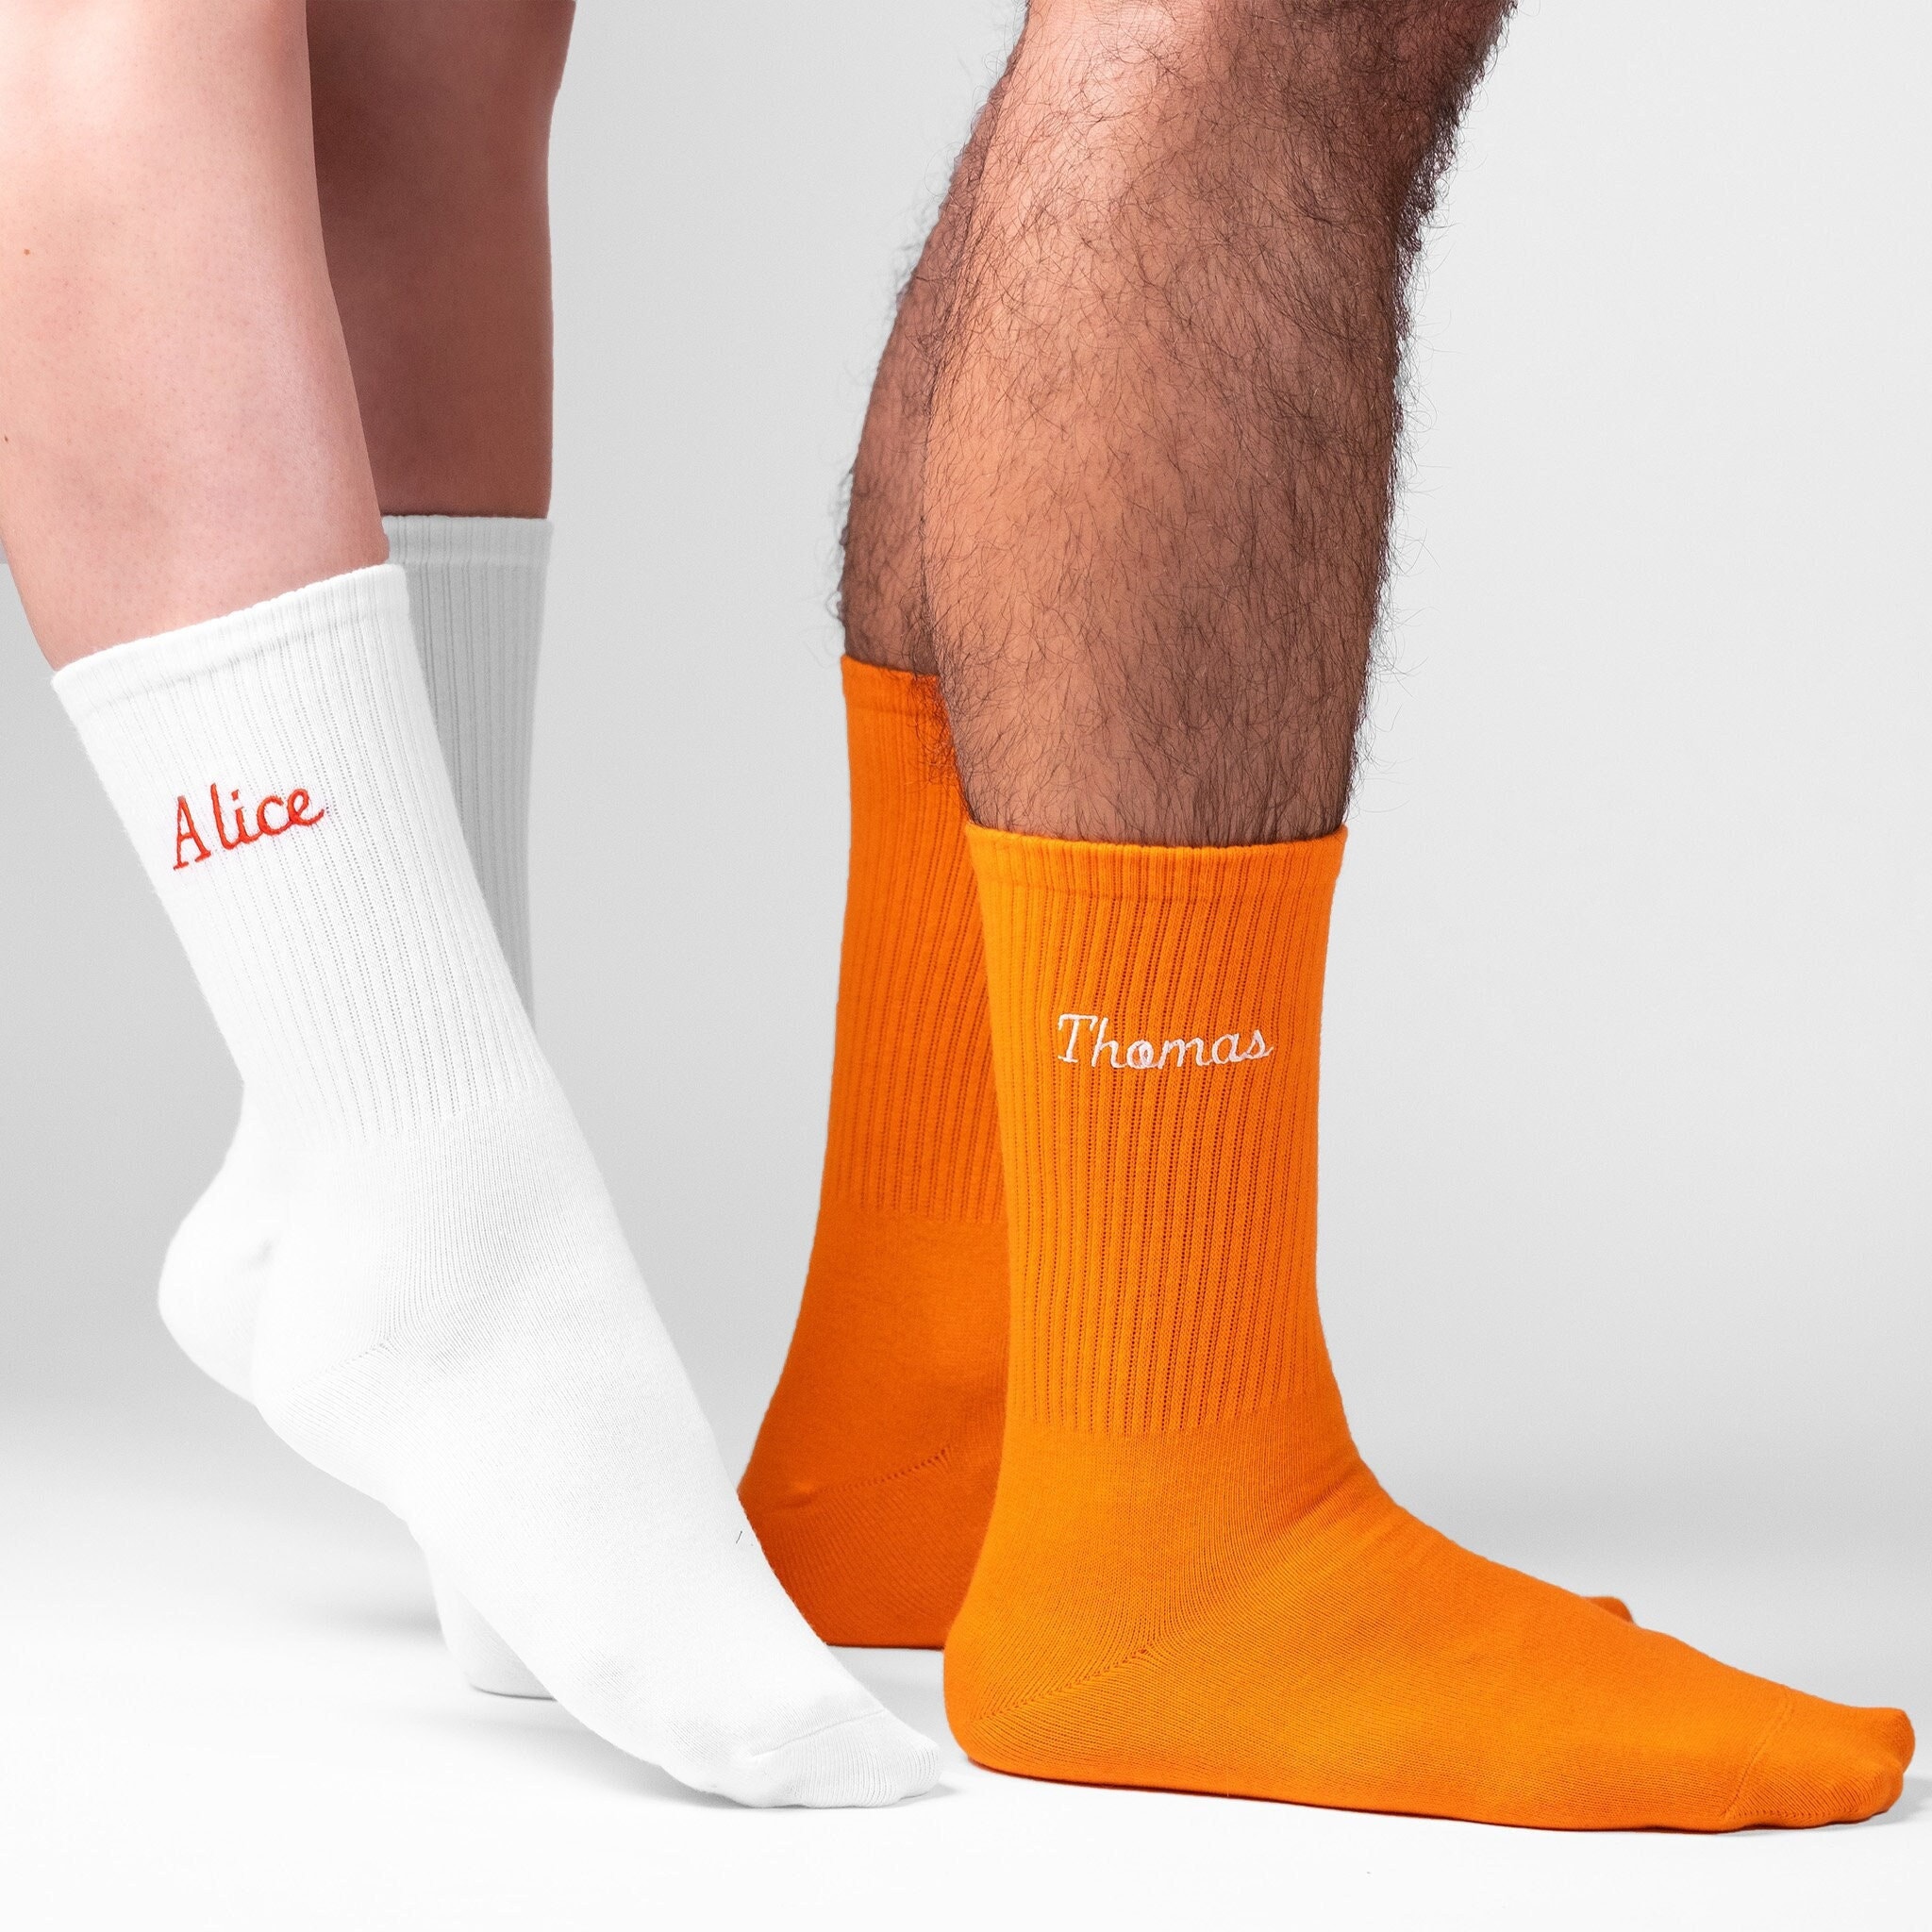 Unisex Custom Name Socks Personalised Embroidered Name on Soft